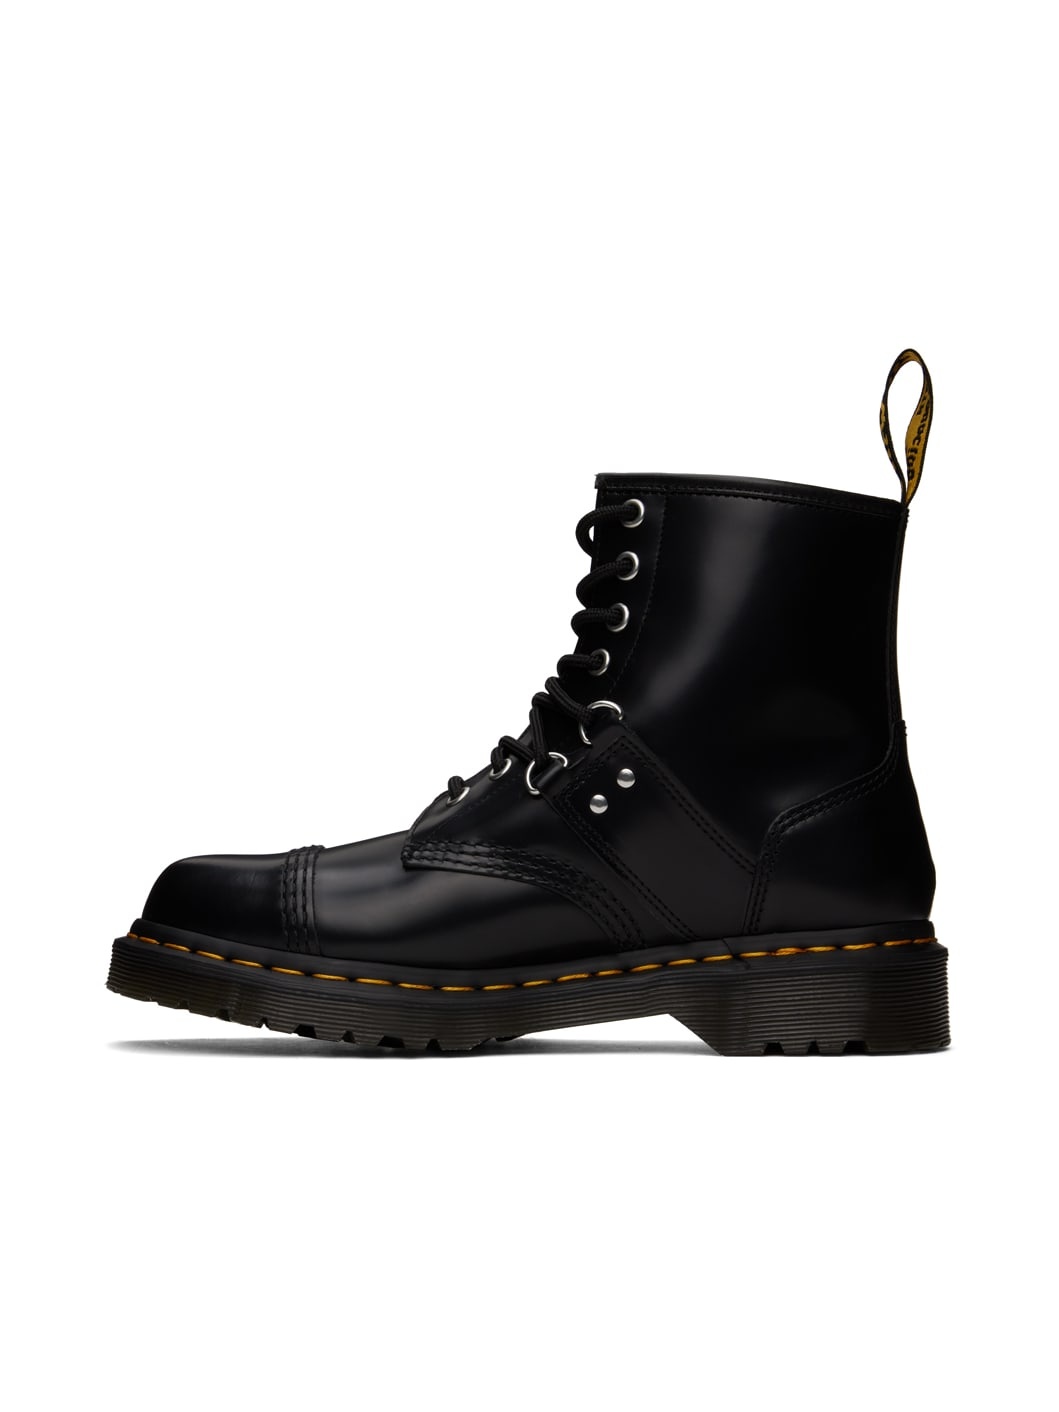 Black 1460 Boots - 3